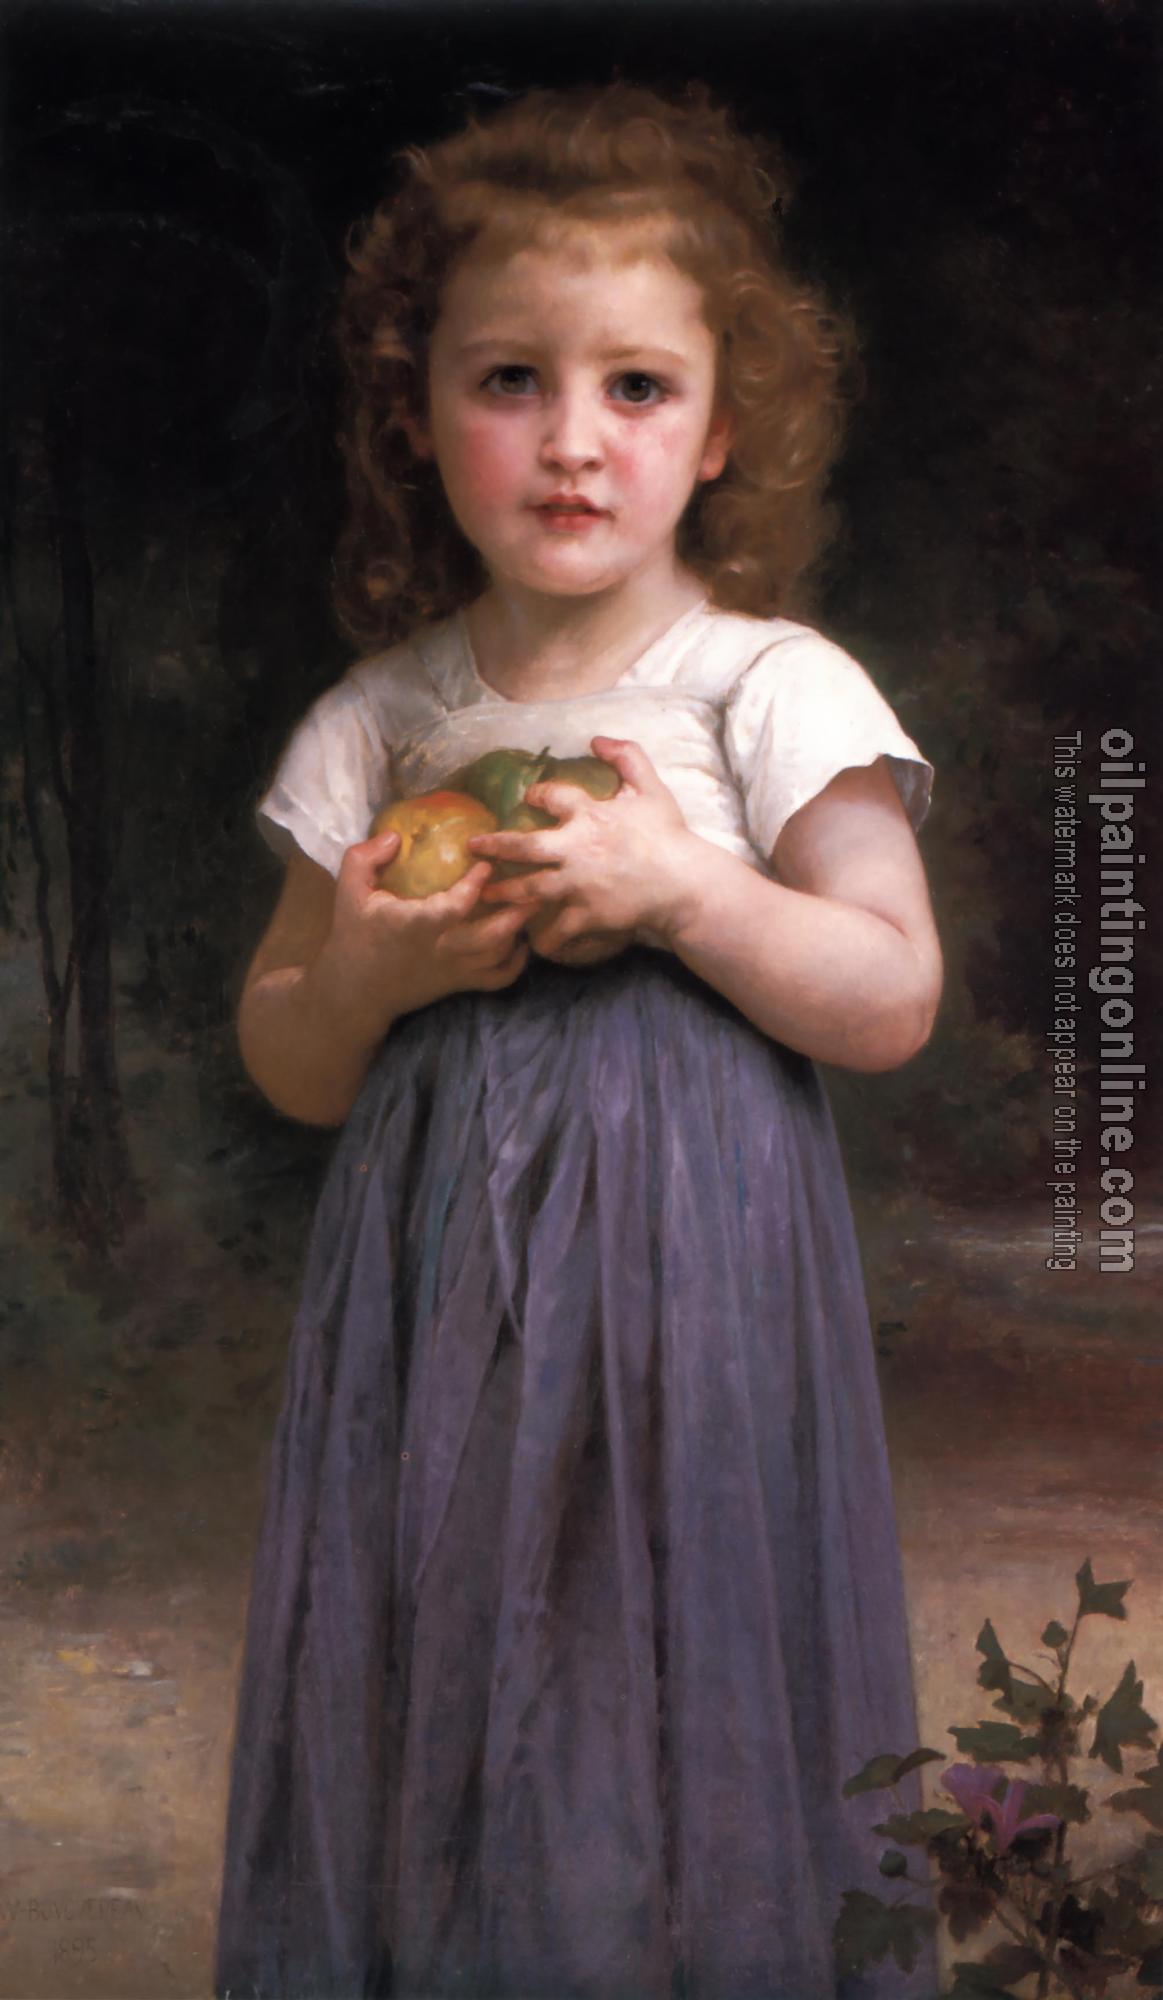 Bouguereau, William-Adolphe - Petite fille tenant des pommes dans les mains( Little girl holding apples in her hands)